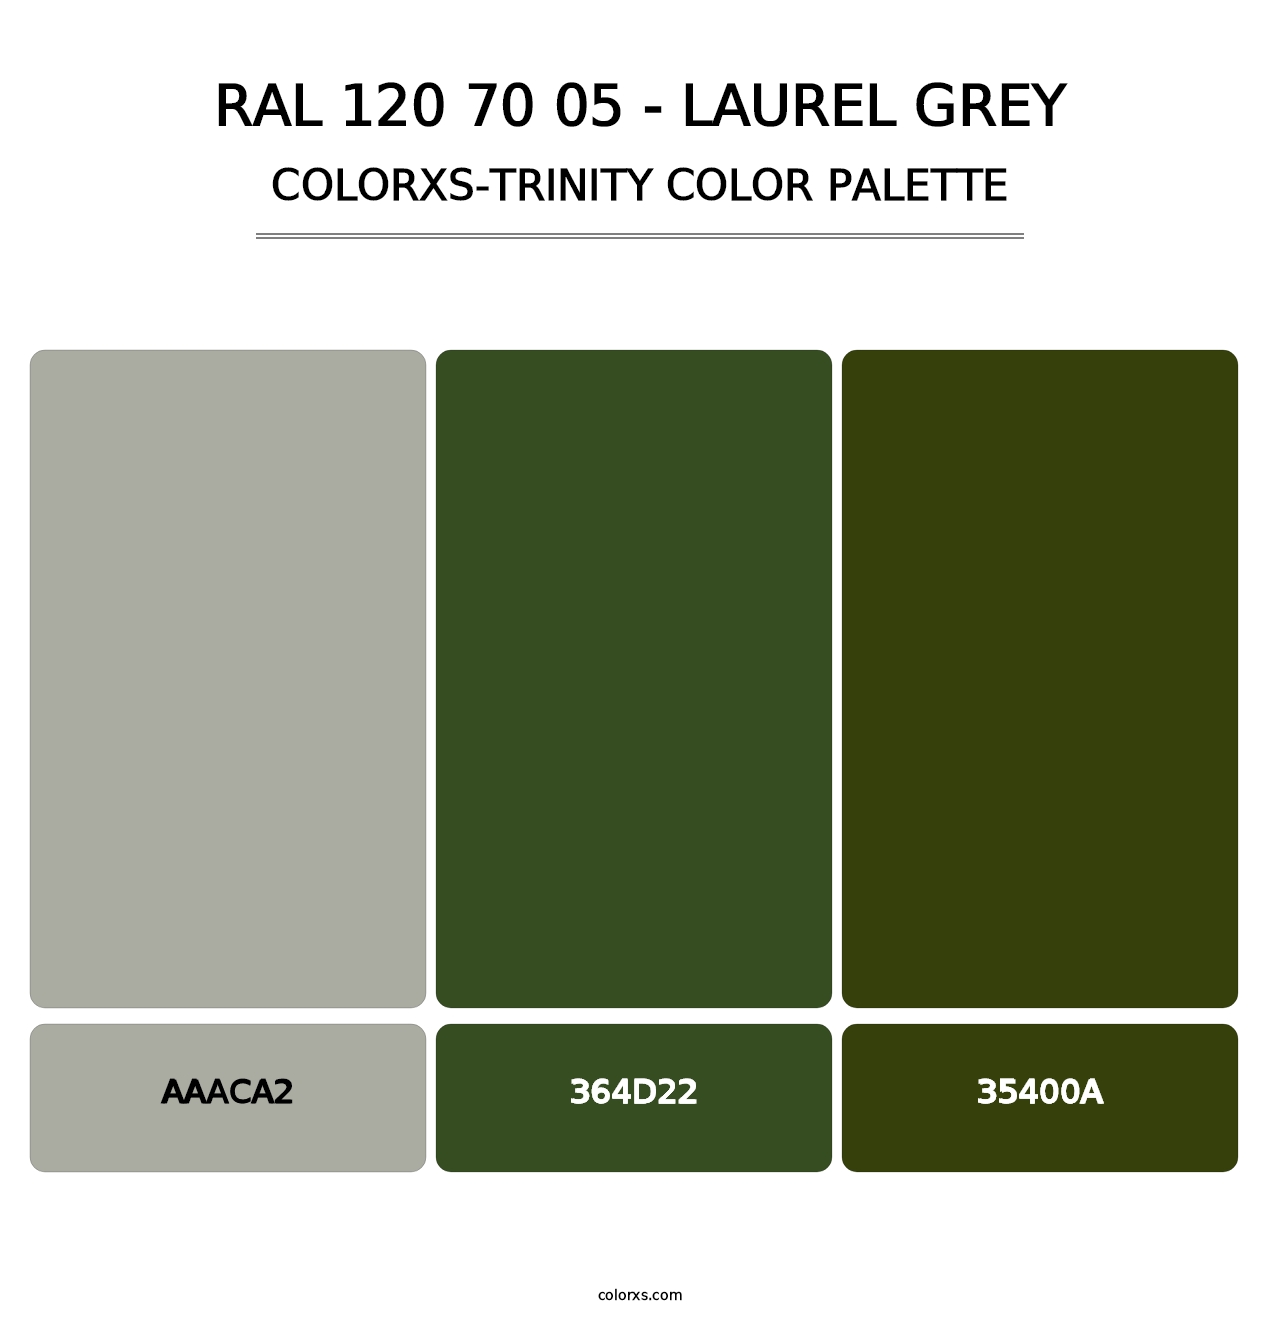 RAL 120 70 05 - Laurel Grey - Colorxs Trinity Palette